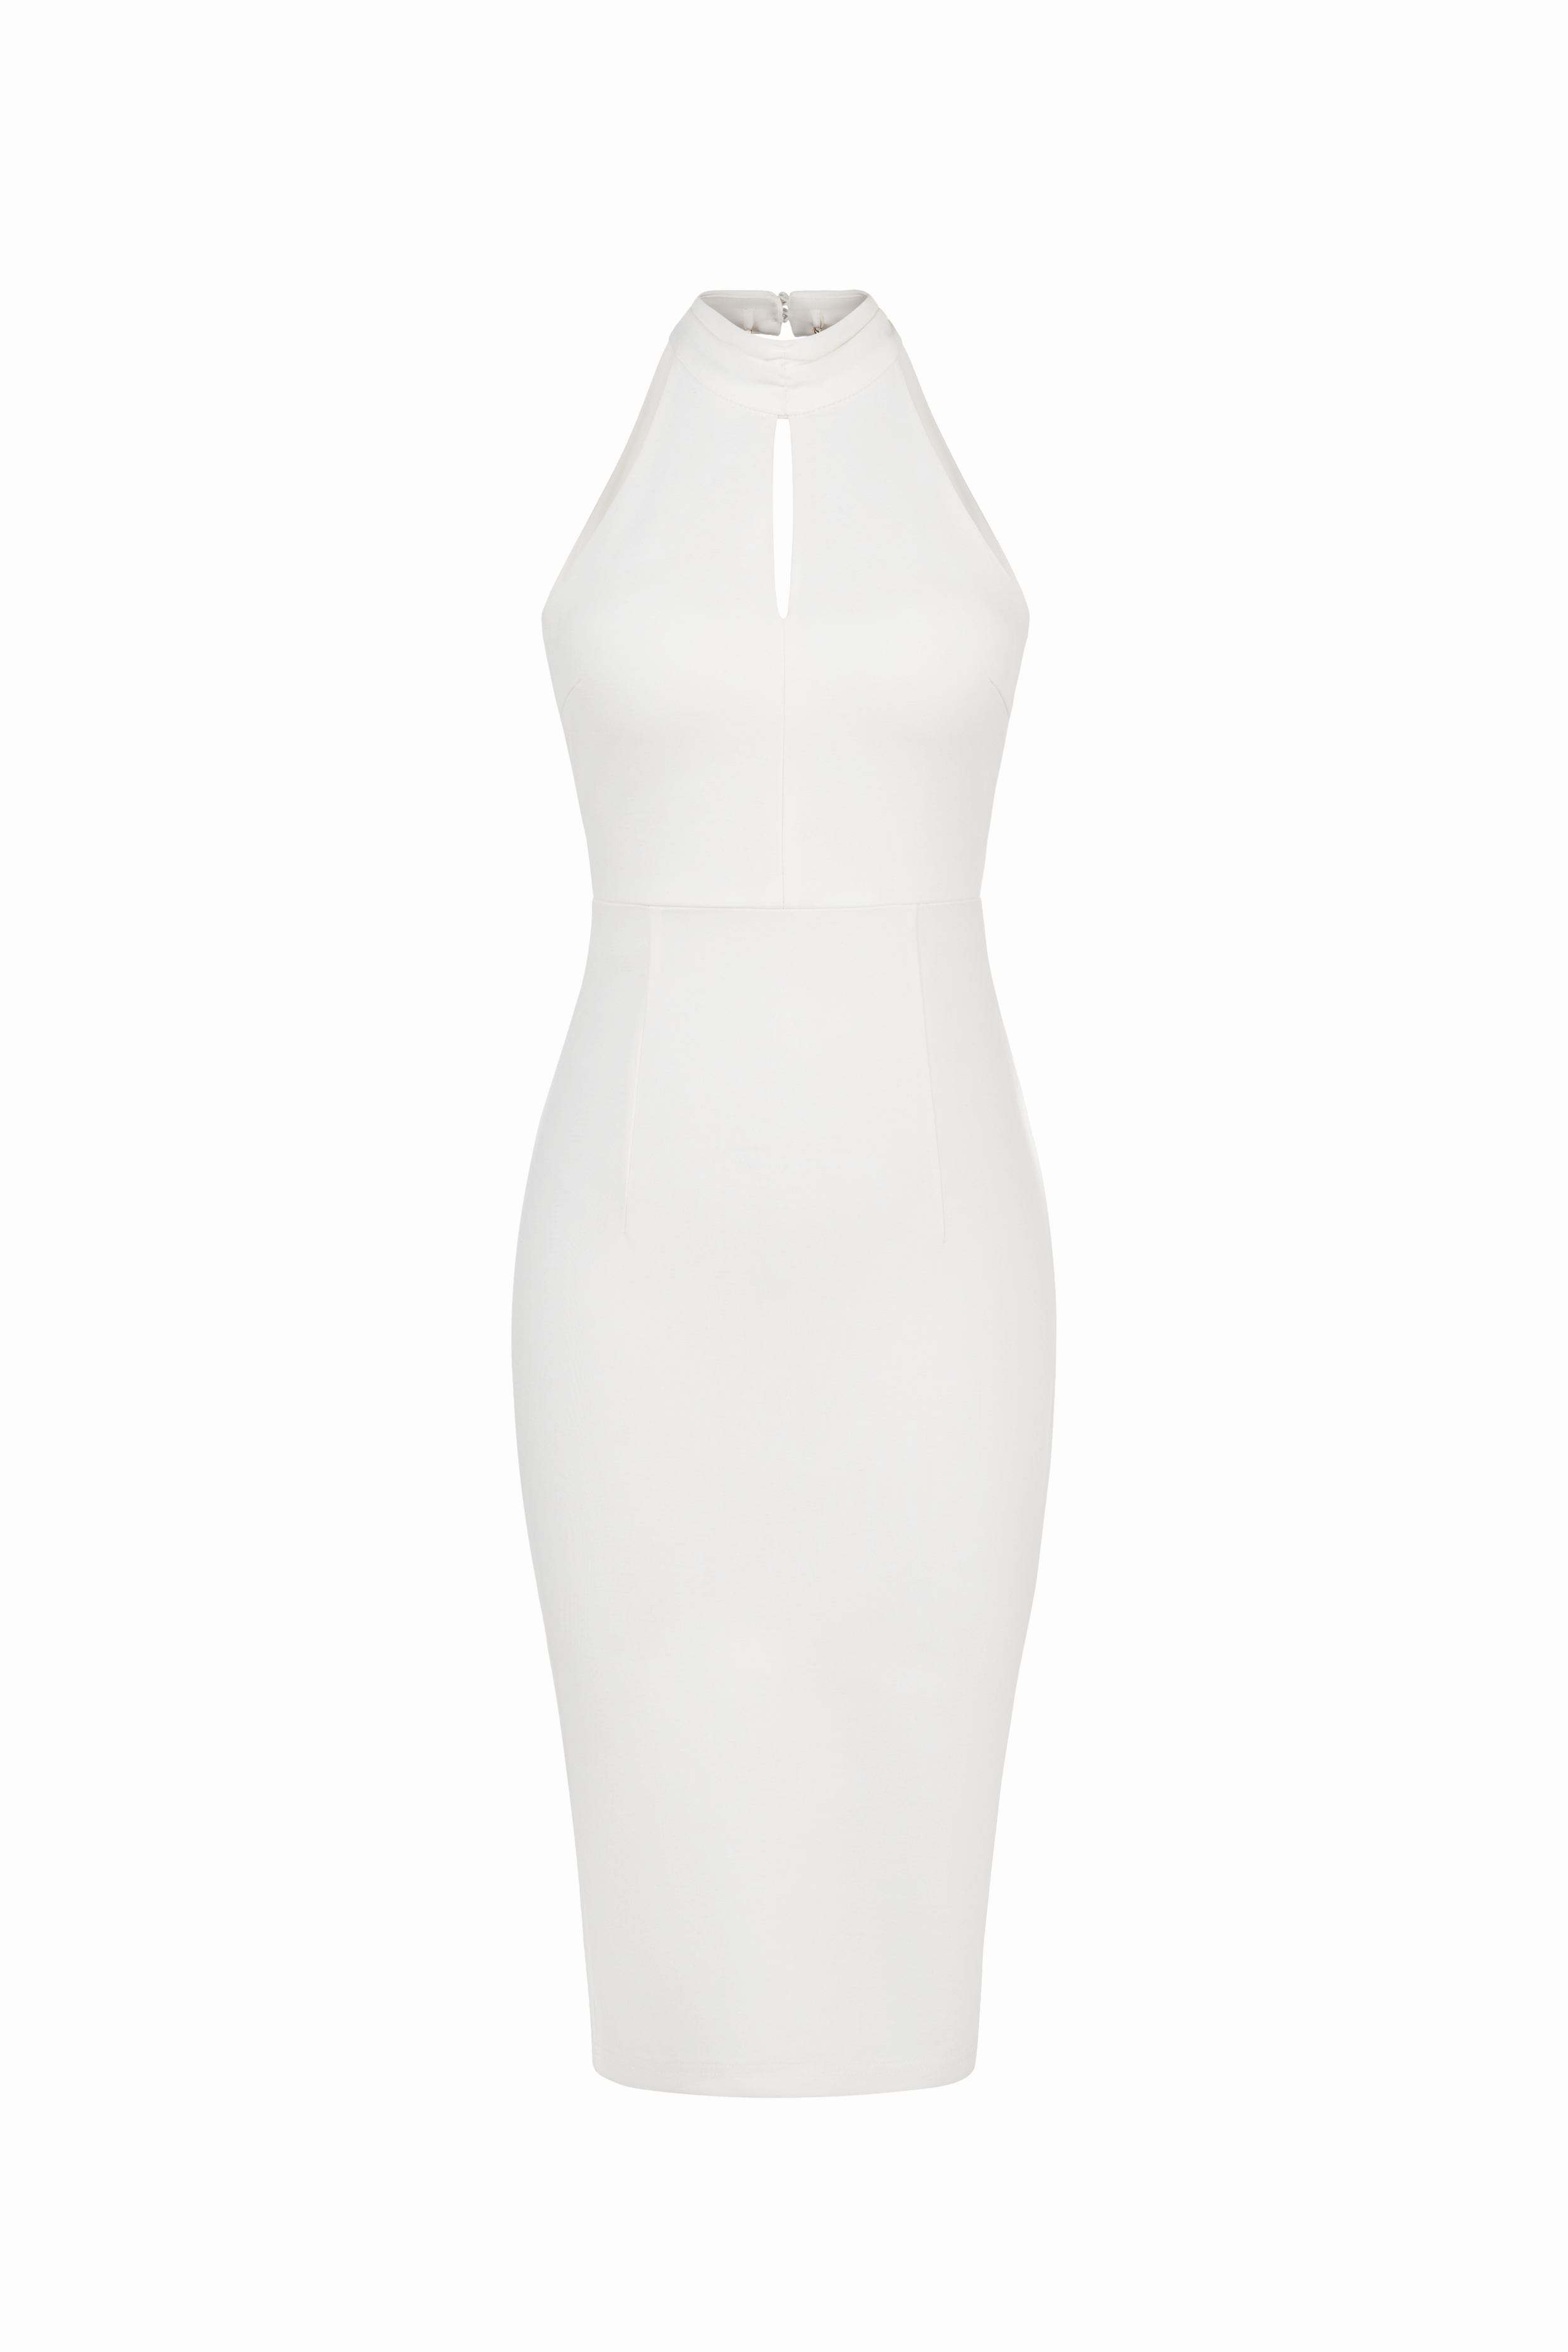 Sonnet Halterneck Open Back Pearl Pencil Dress in Iconic White | Chello